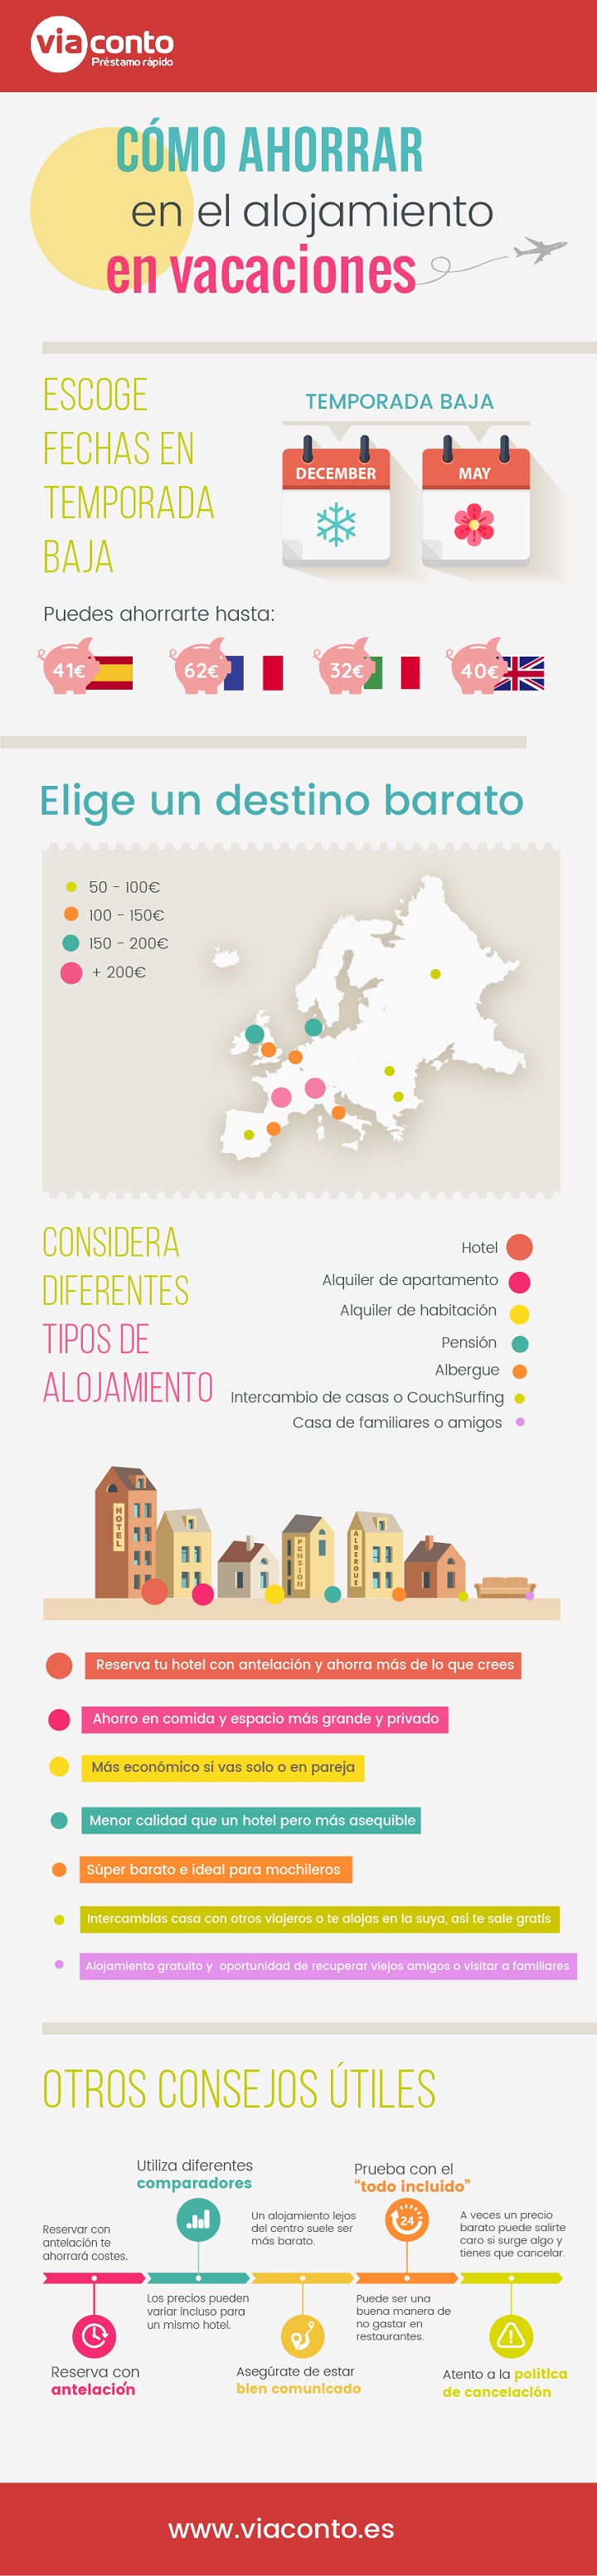 infographic-Viaconto